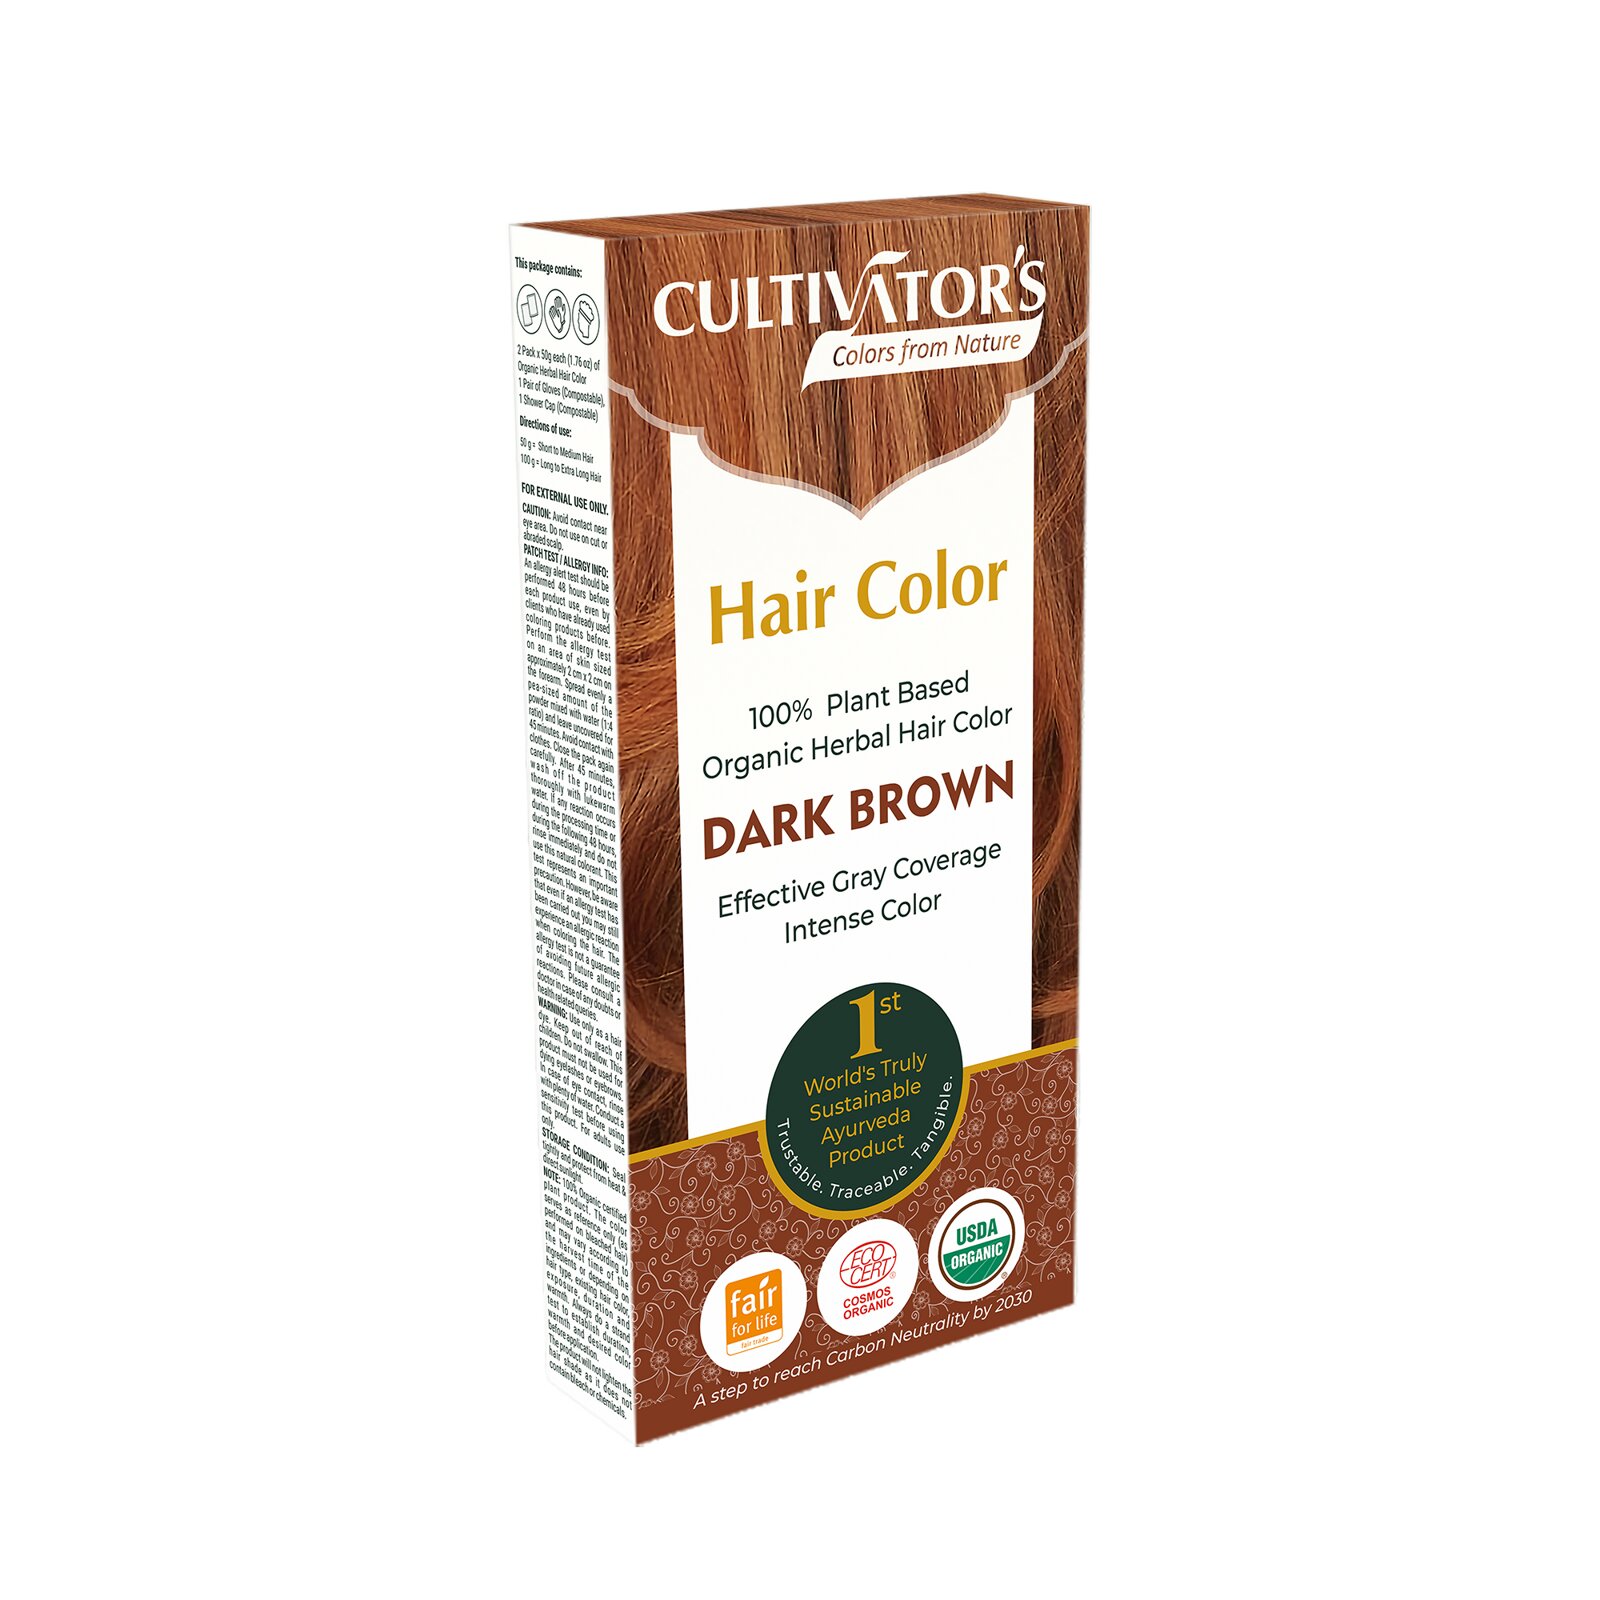 Cultivator's Organic Herbal Hair Color Hiusväri, Dark Brown 